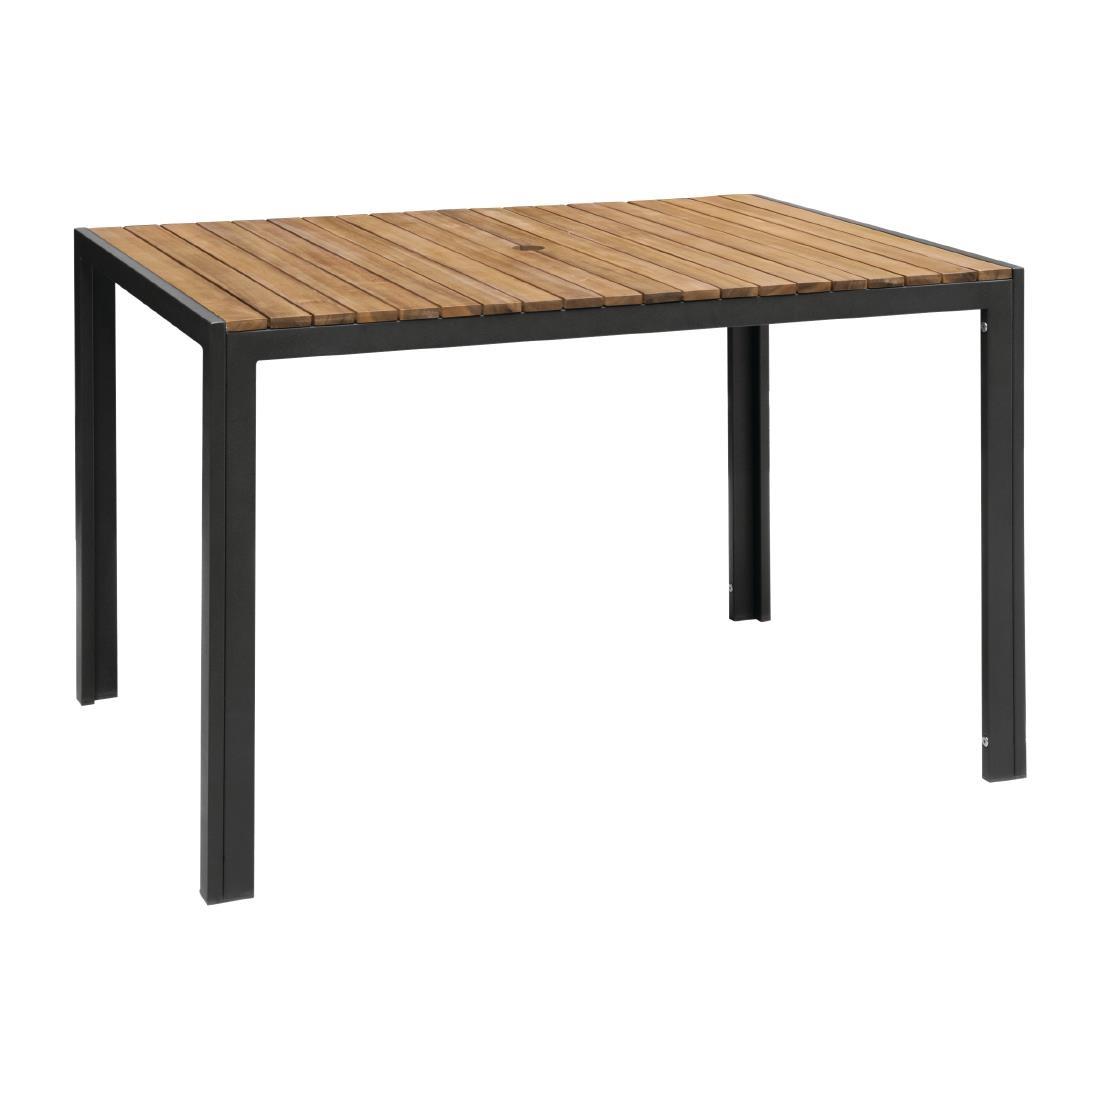 Bolero Acacia Wood and Steel Rectangular Table 1200mm - DS153  - 1